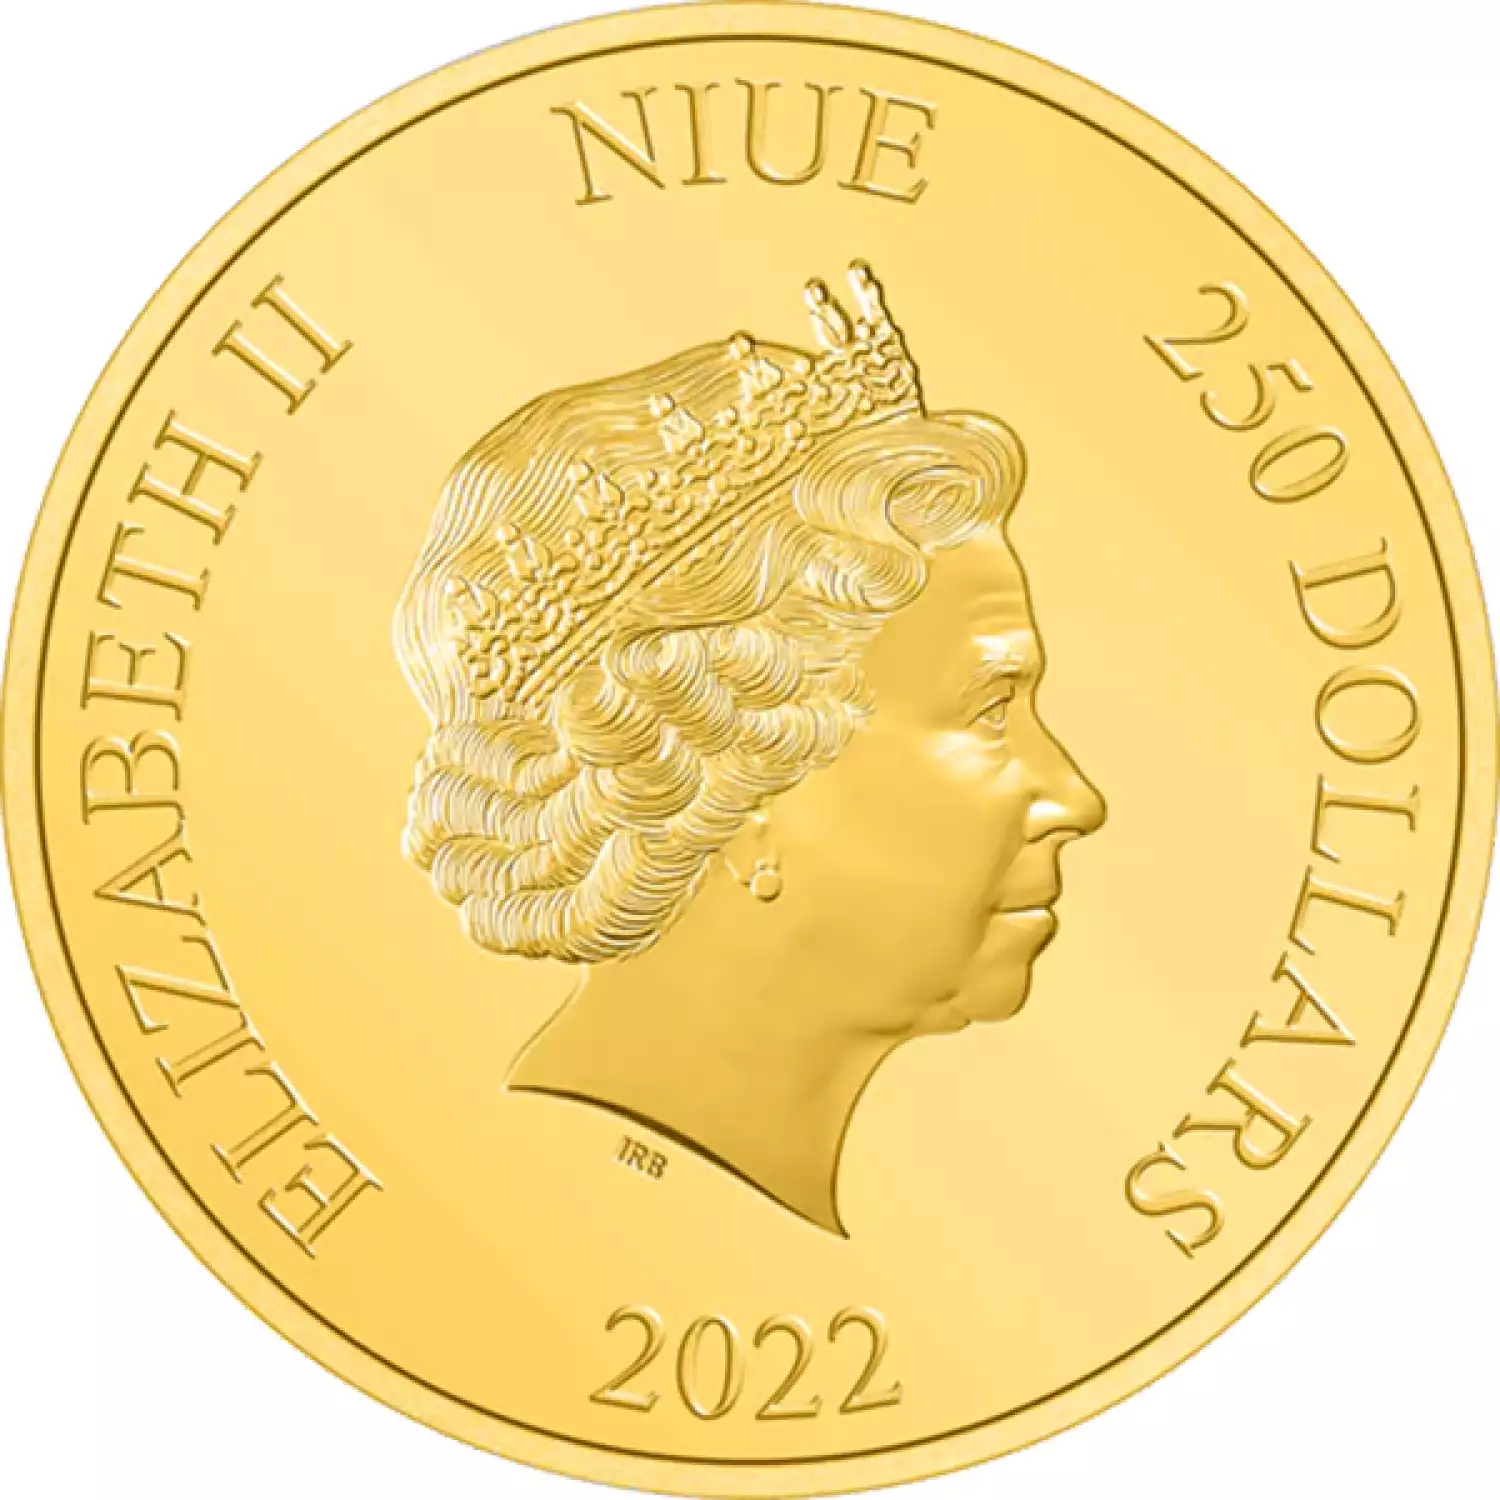 AQUAMAN - 2022 1oz Gold Coin (3)